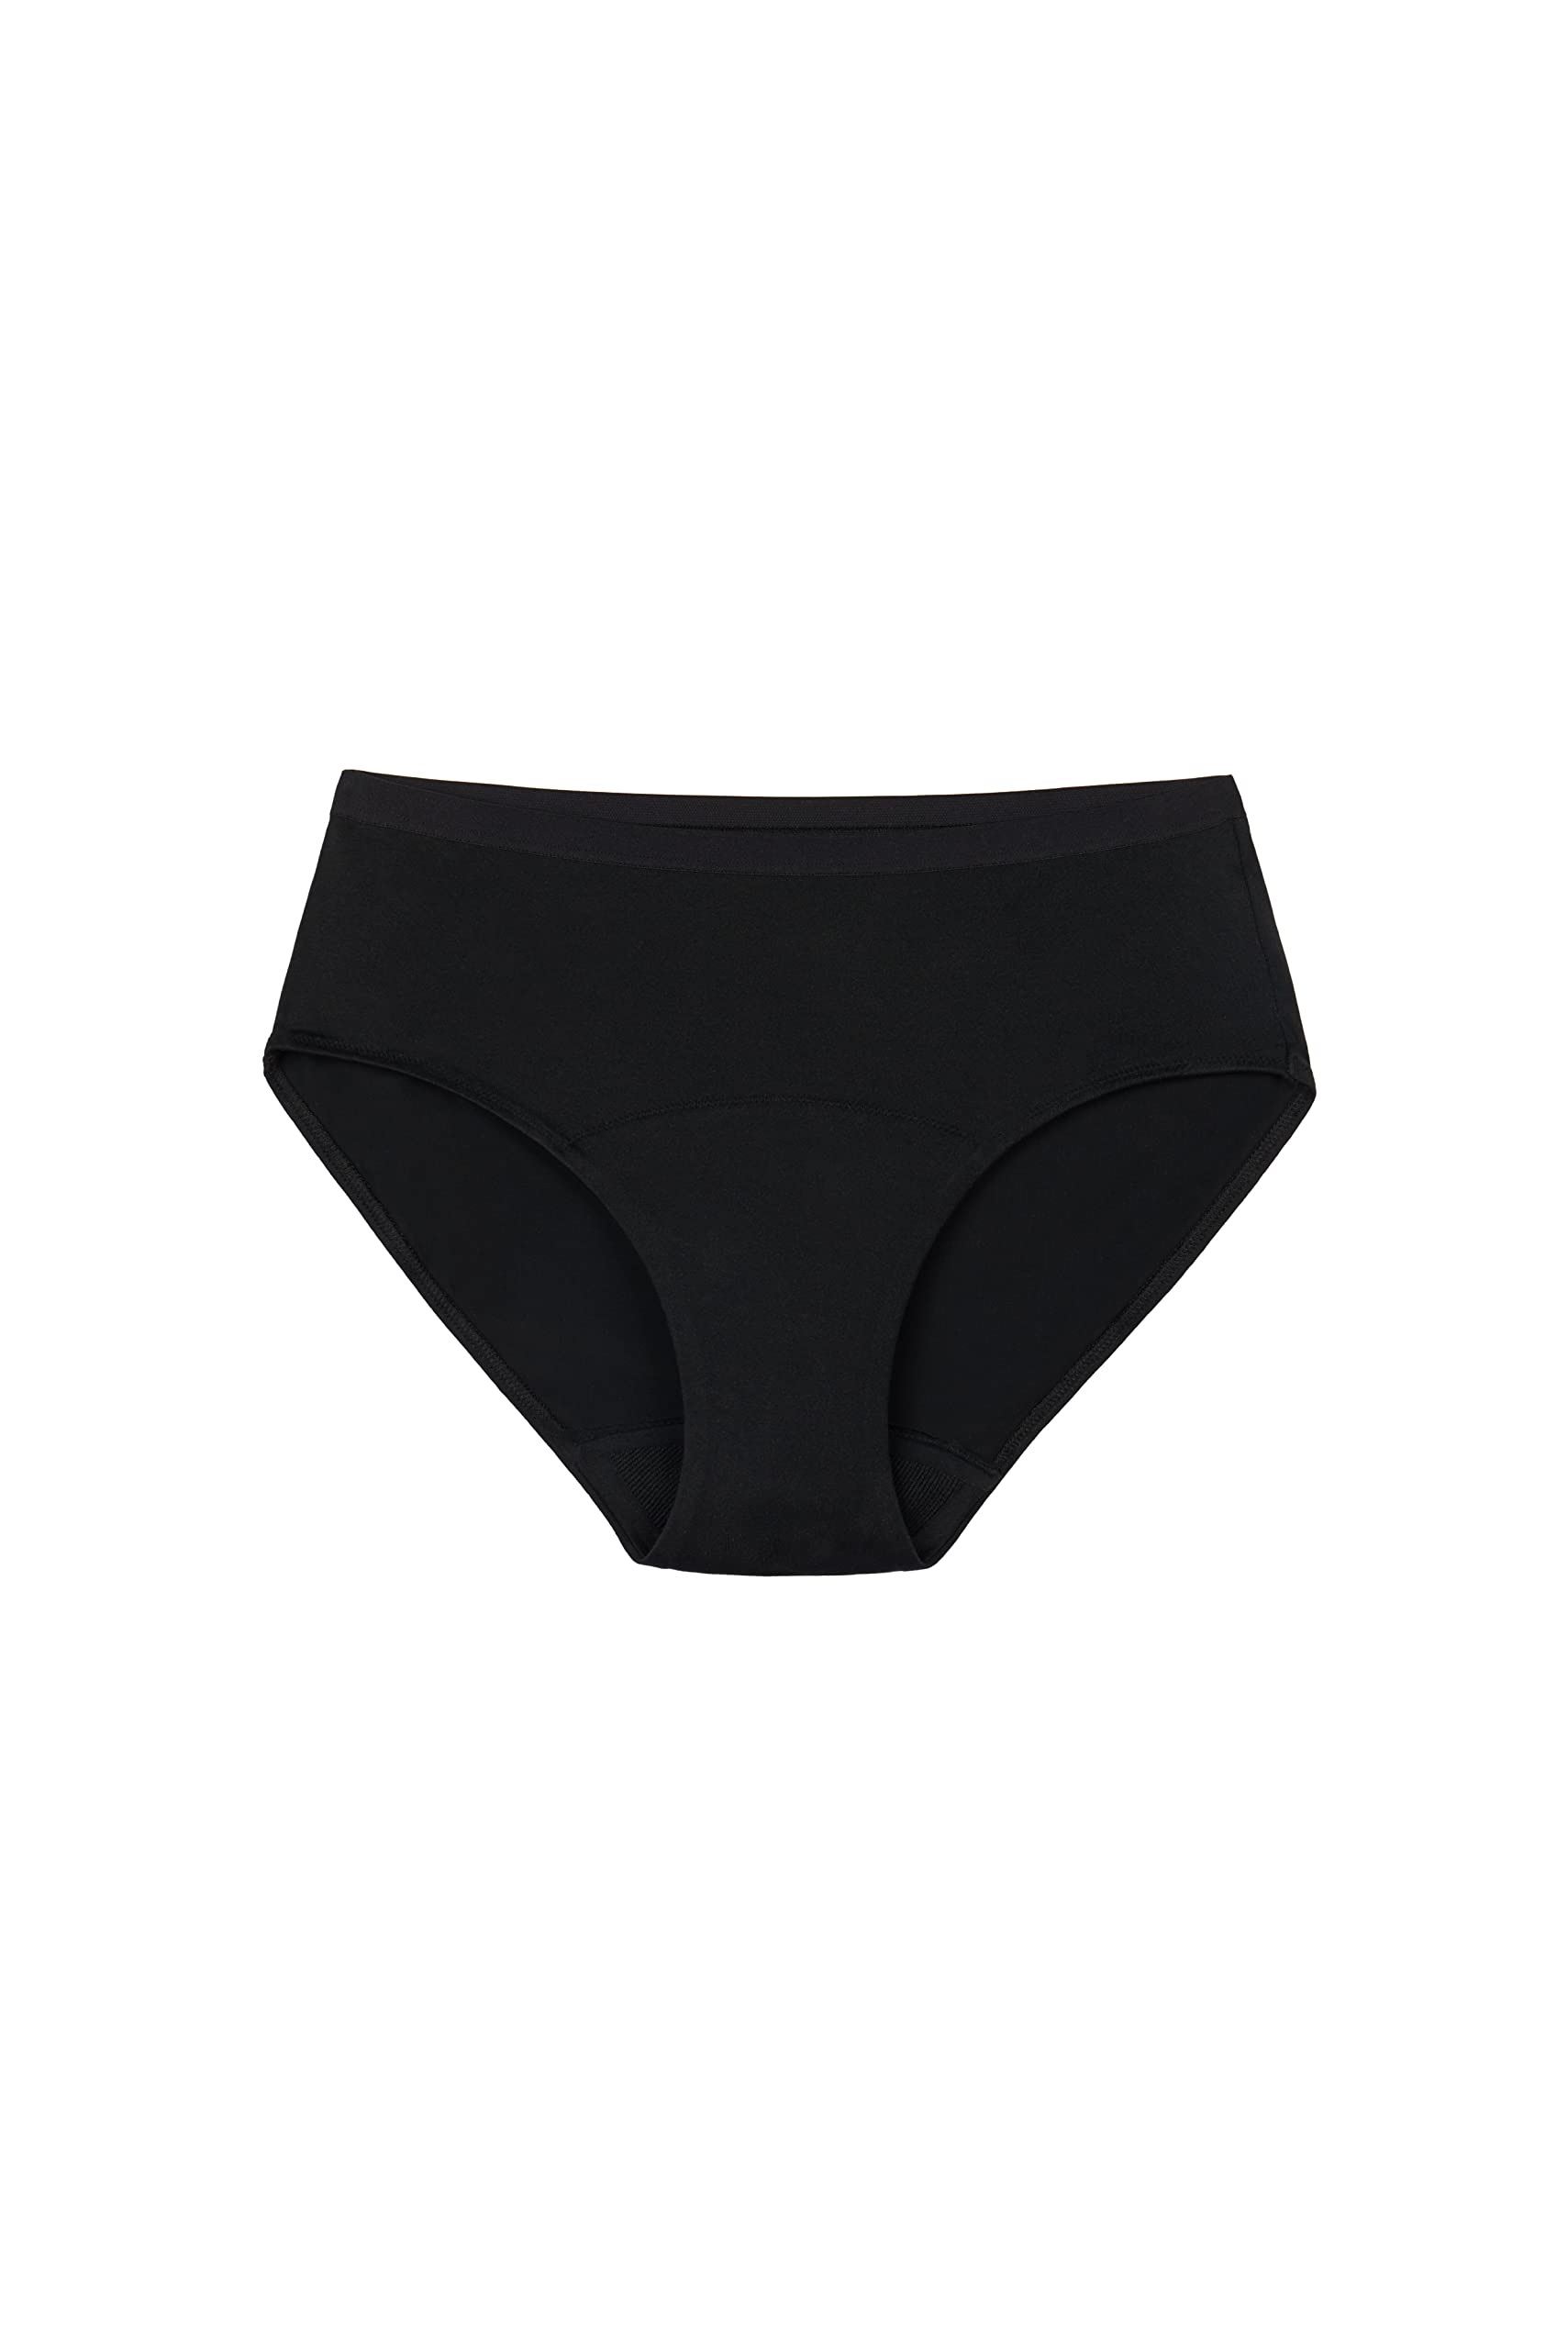 Speax by Thinx Hiphugger Underwear for Bladder Leak Protection, Incontinence Underwear for Women